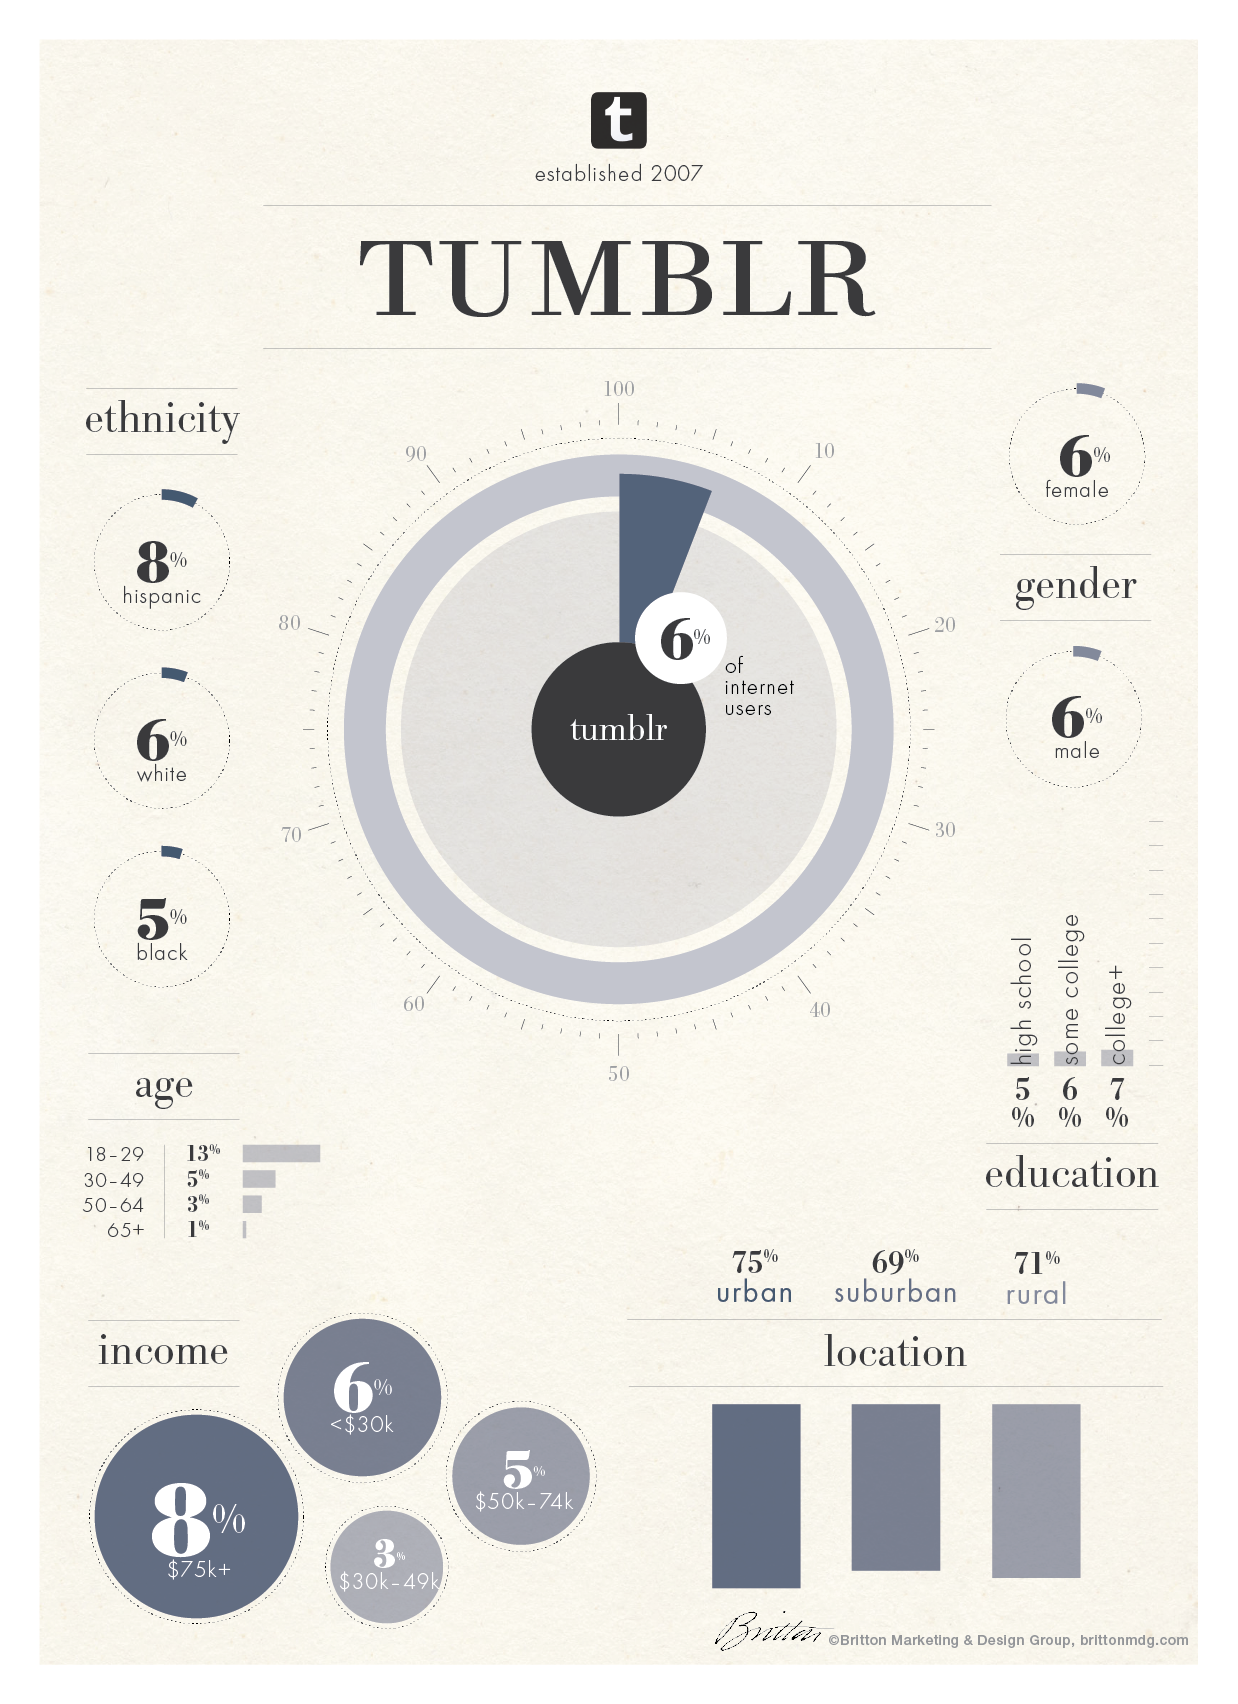 #Infographic: The demographics of #Tumblr users - #socialmedia